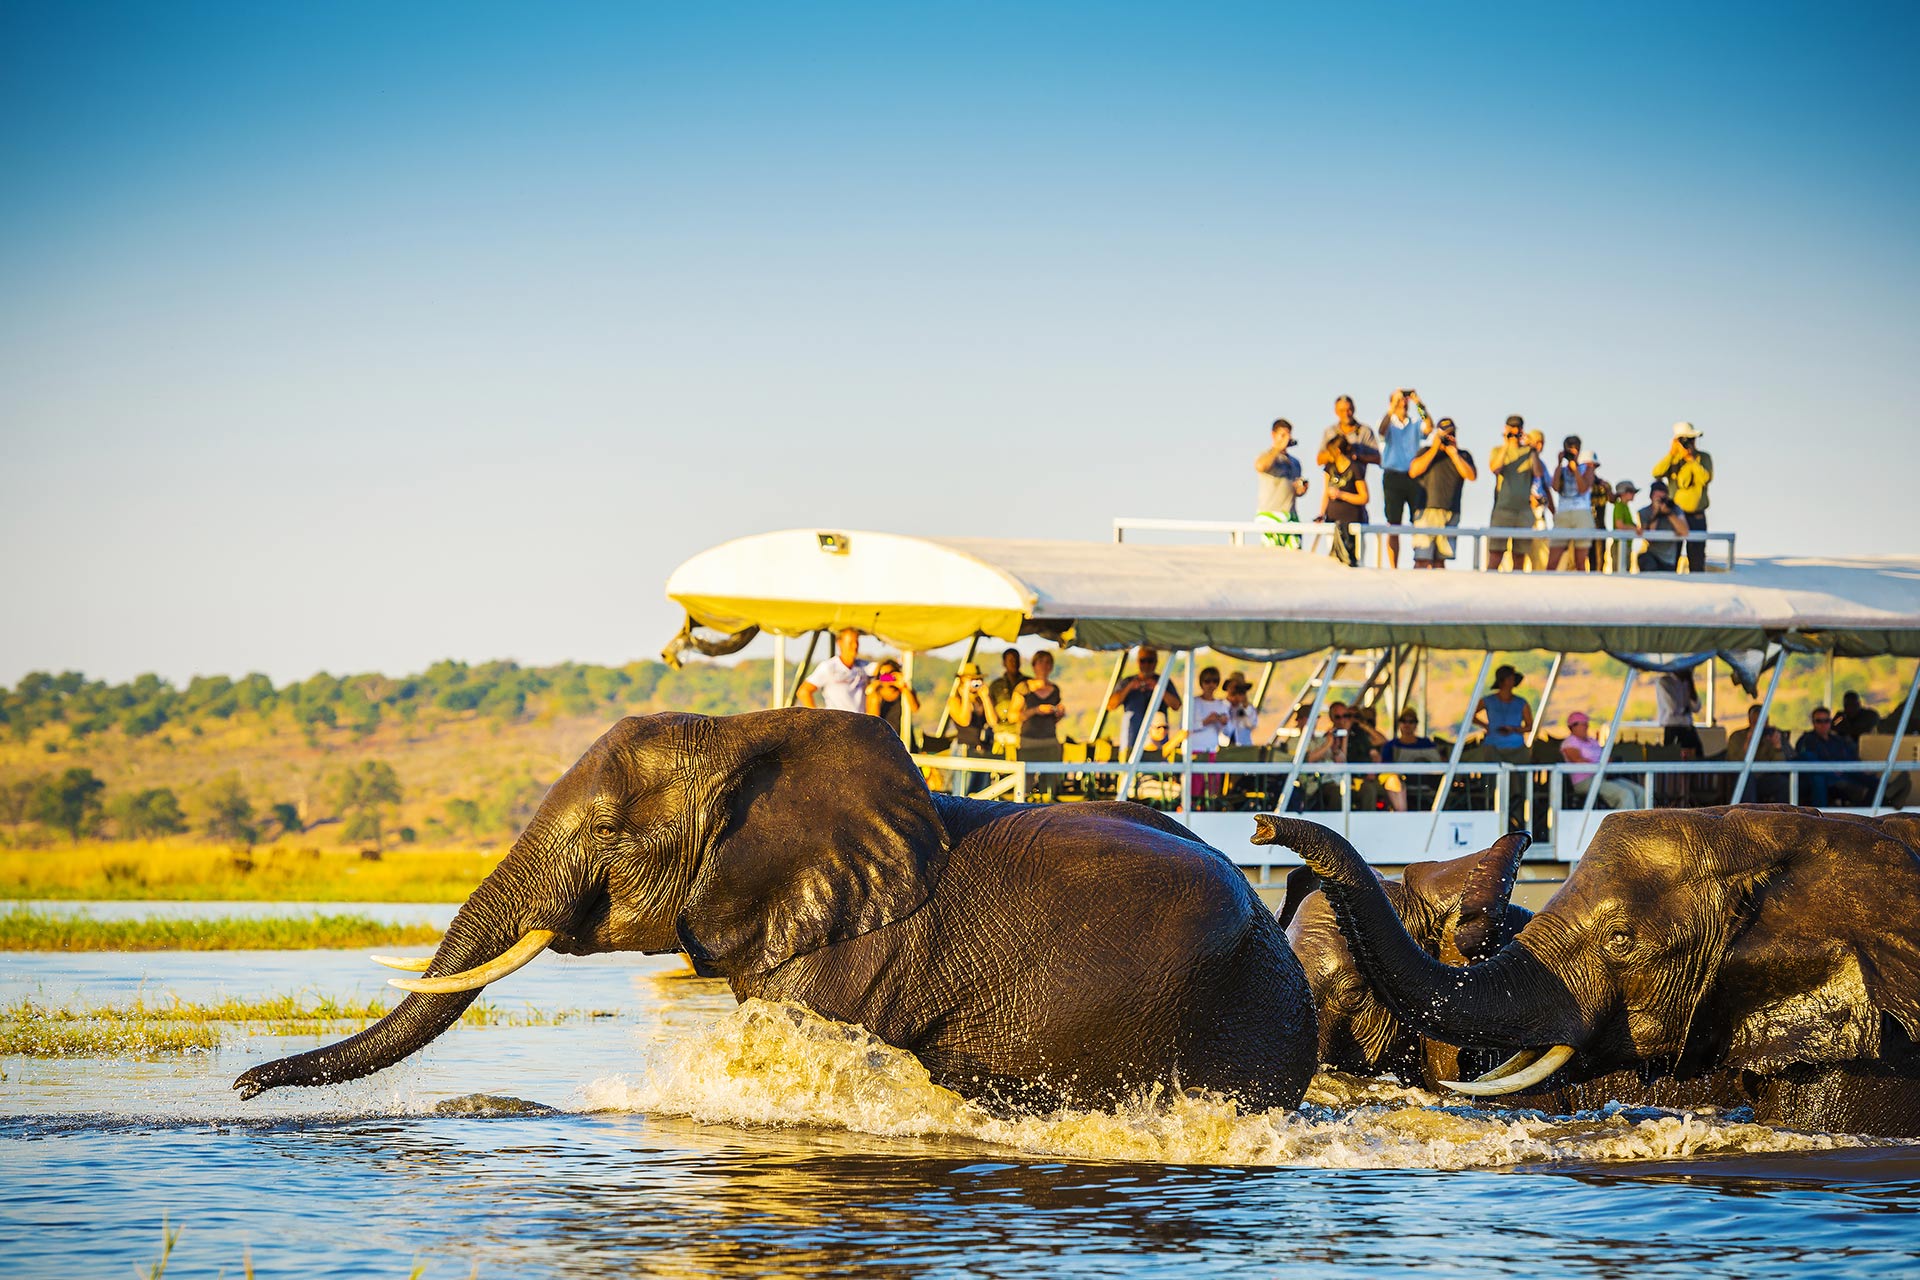 African Safari; Courtesy of THPStock/Shutterstock.com